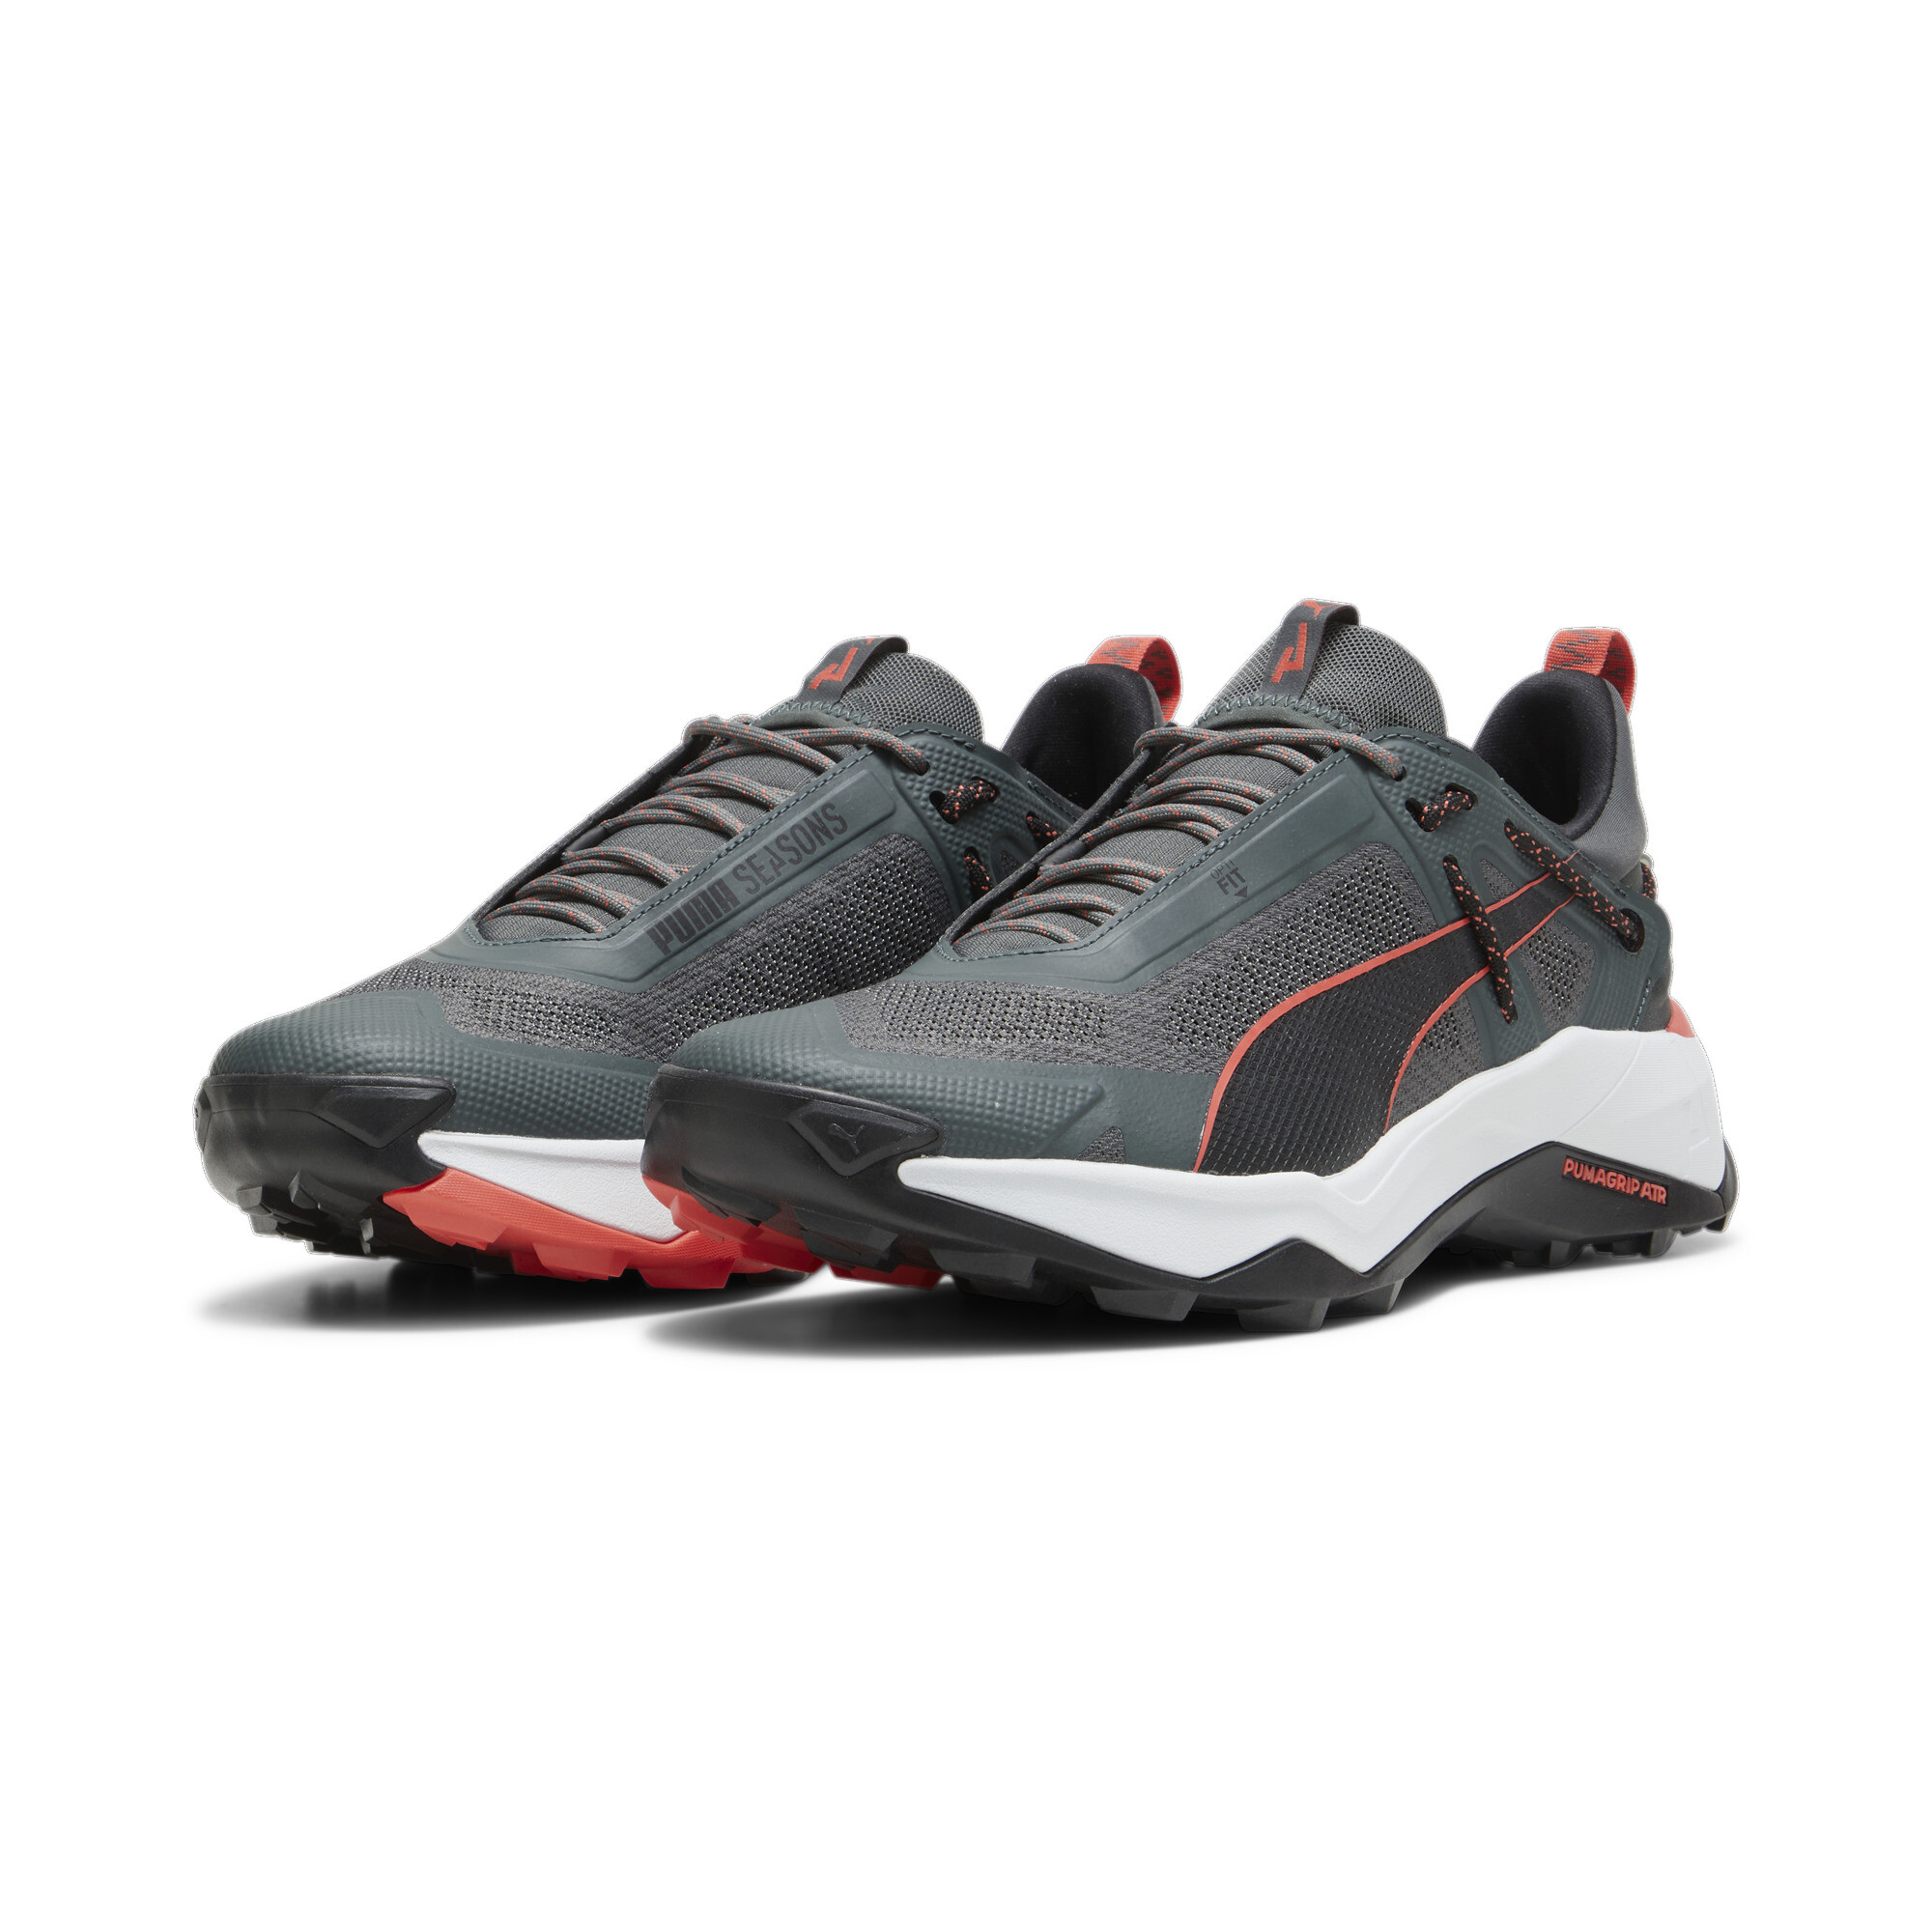 Men's PUMA Explore NITROâ¢ Hiking Shoes In Gray, Size EU 40.5